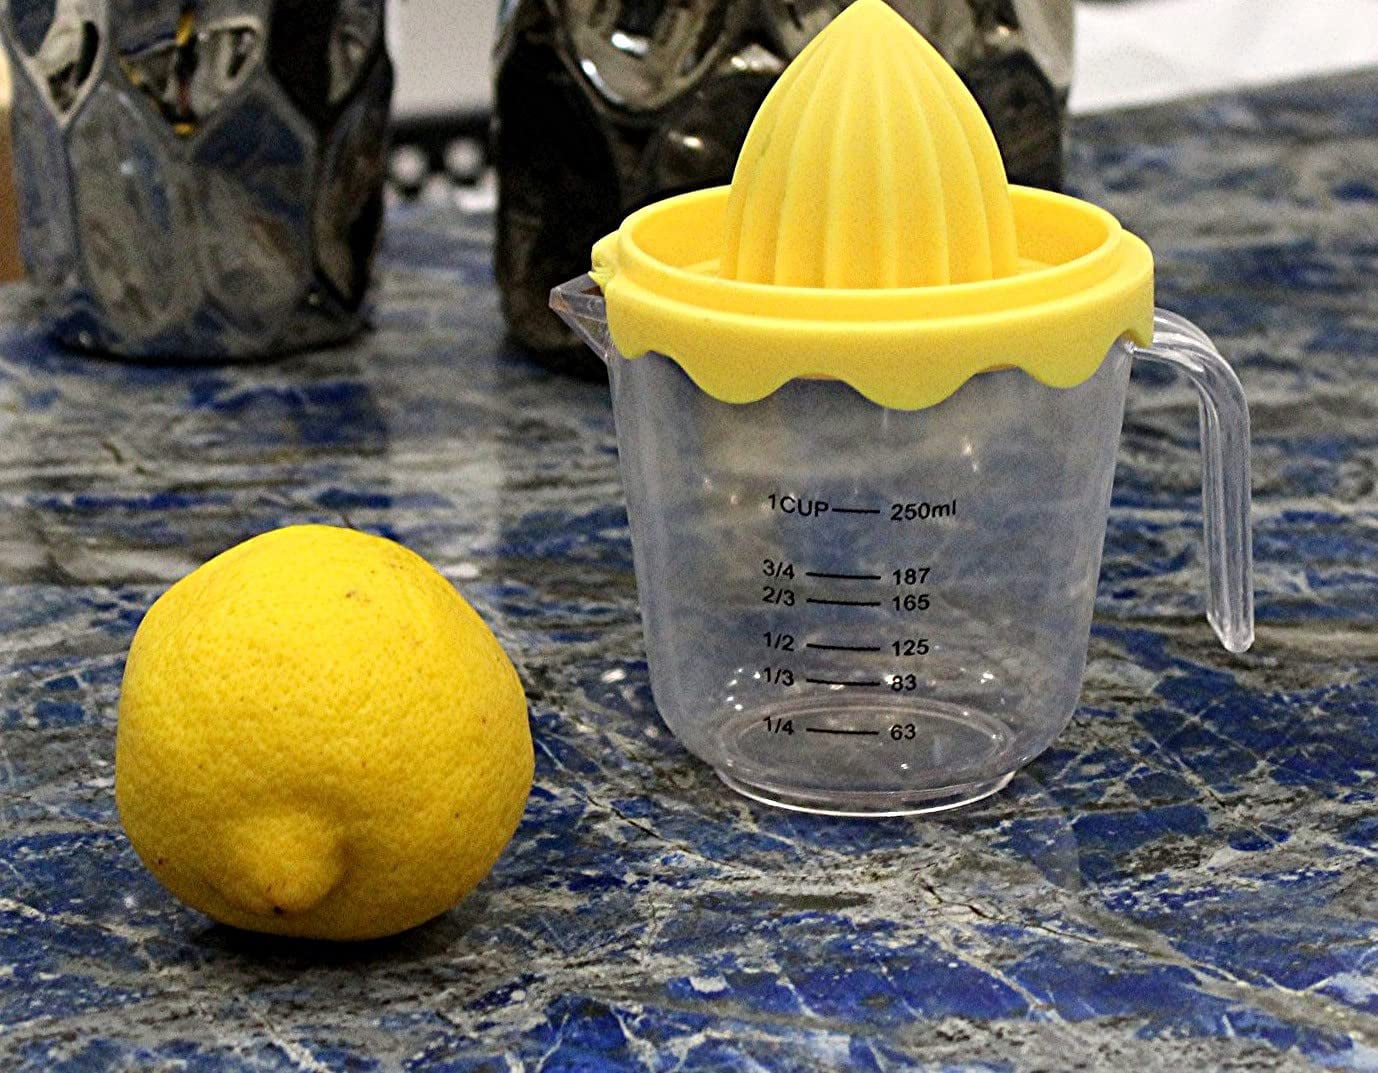  Mueller Citrus Lemon Orange Juicer, Hand Squeezer Rotation  Press, Manual Juicer with Easy Pour Spout, European Made, Dishwasher Safe,  Orange: Home & Kitchen